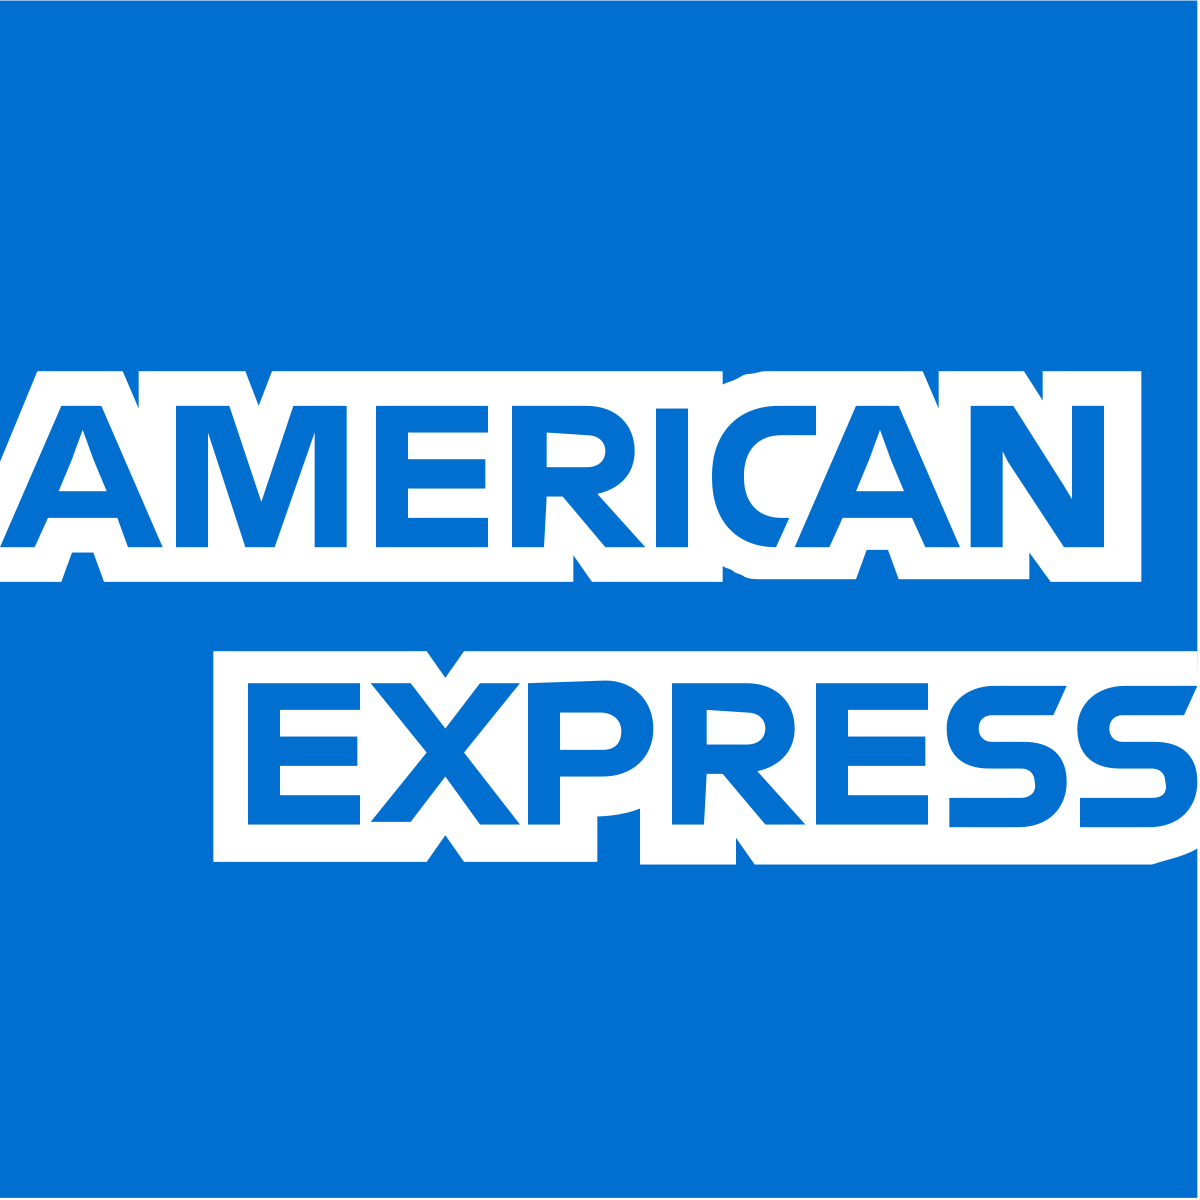 AMERICAN-EXPRESS